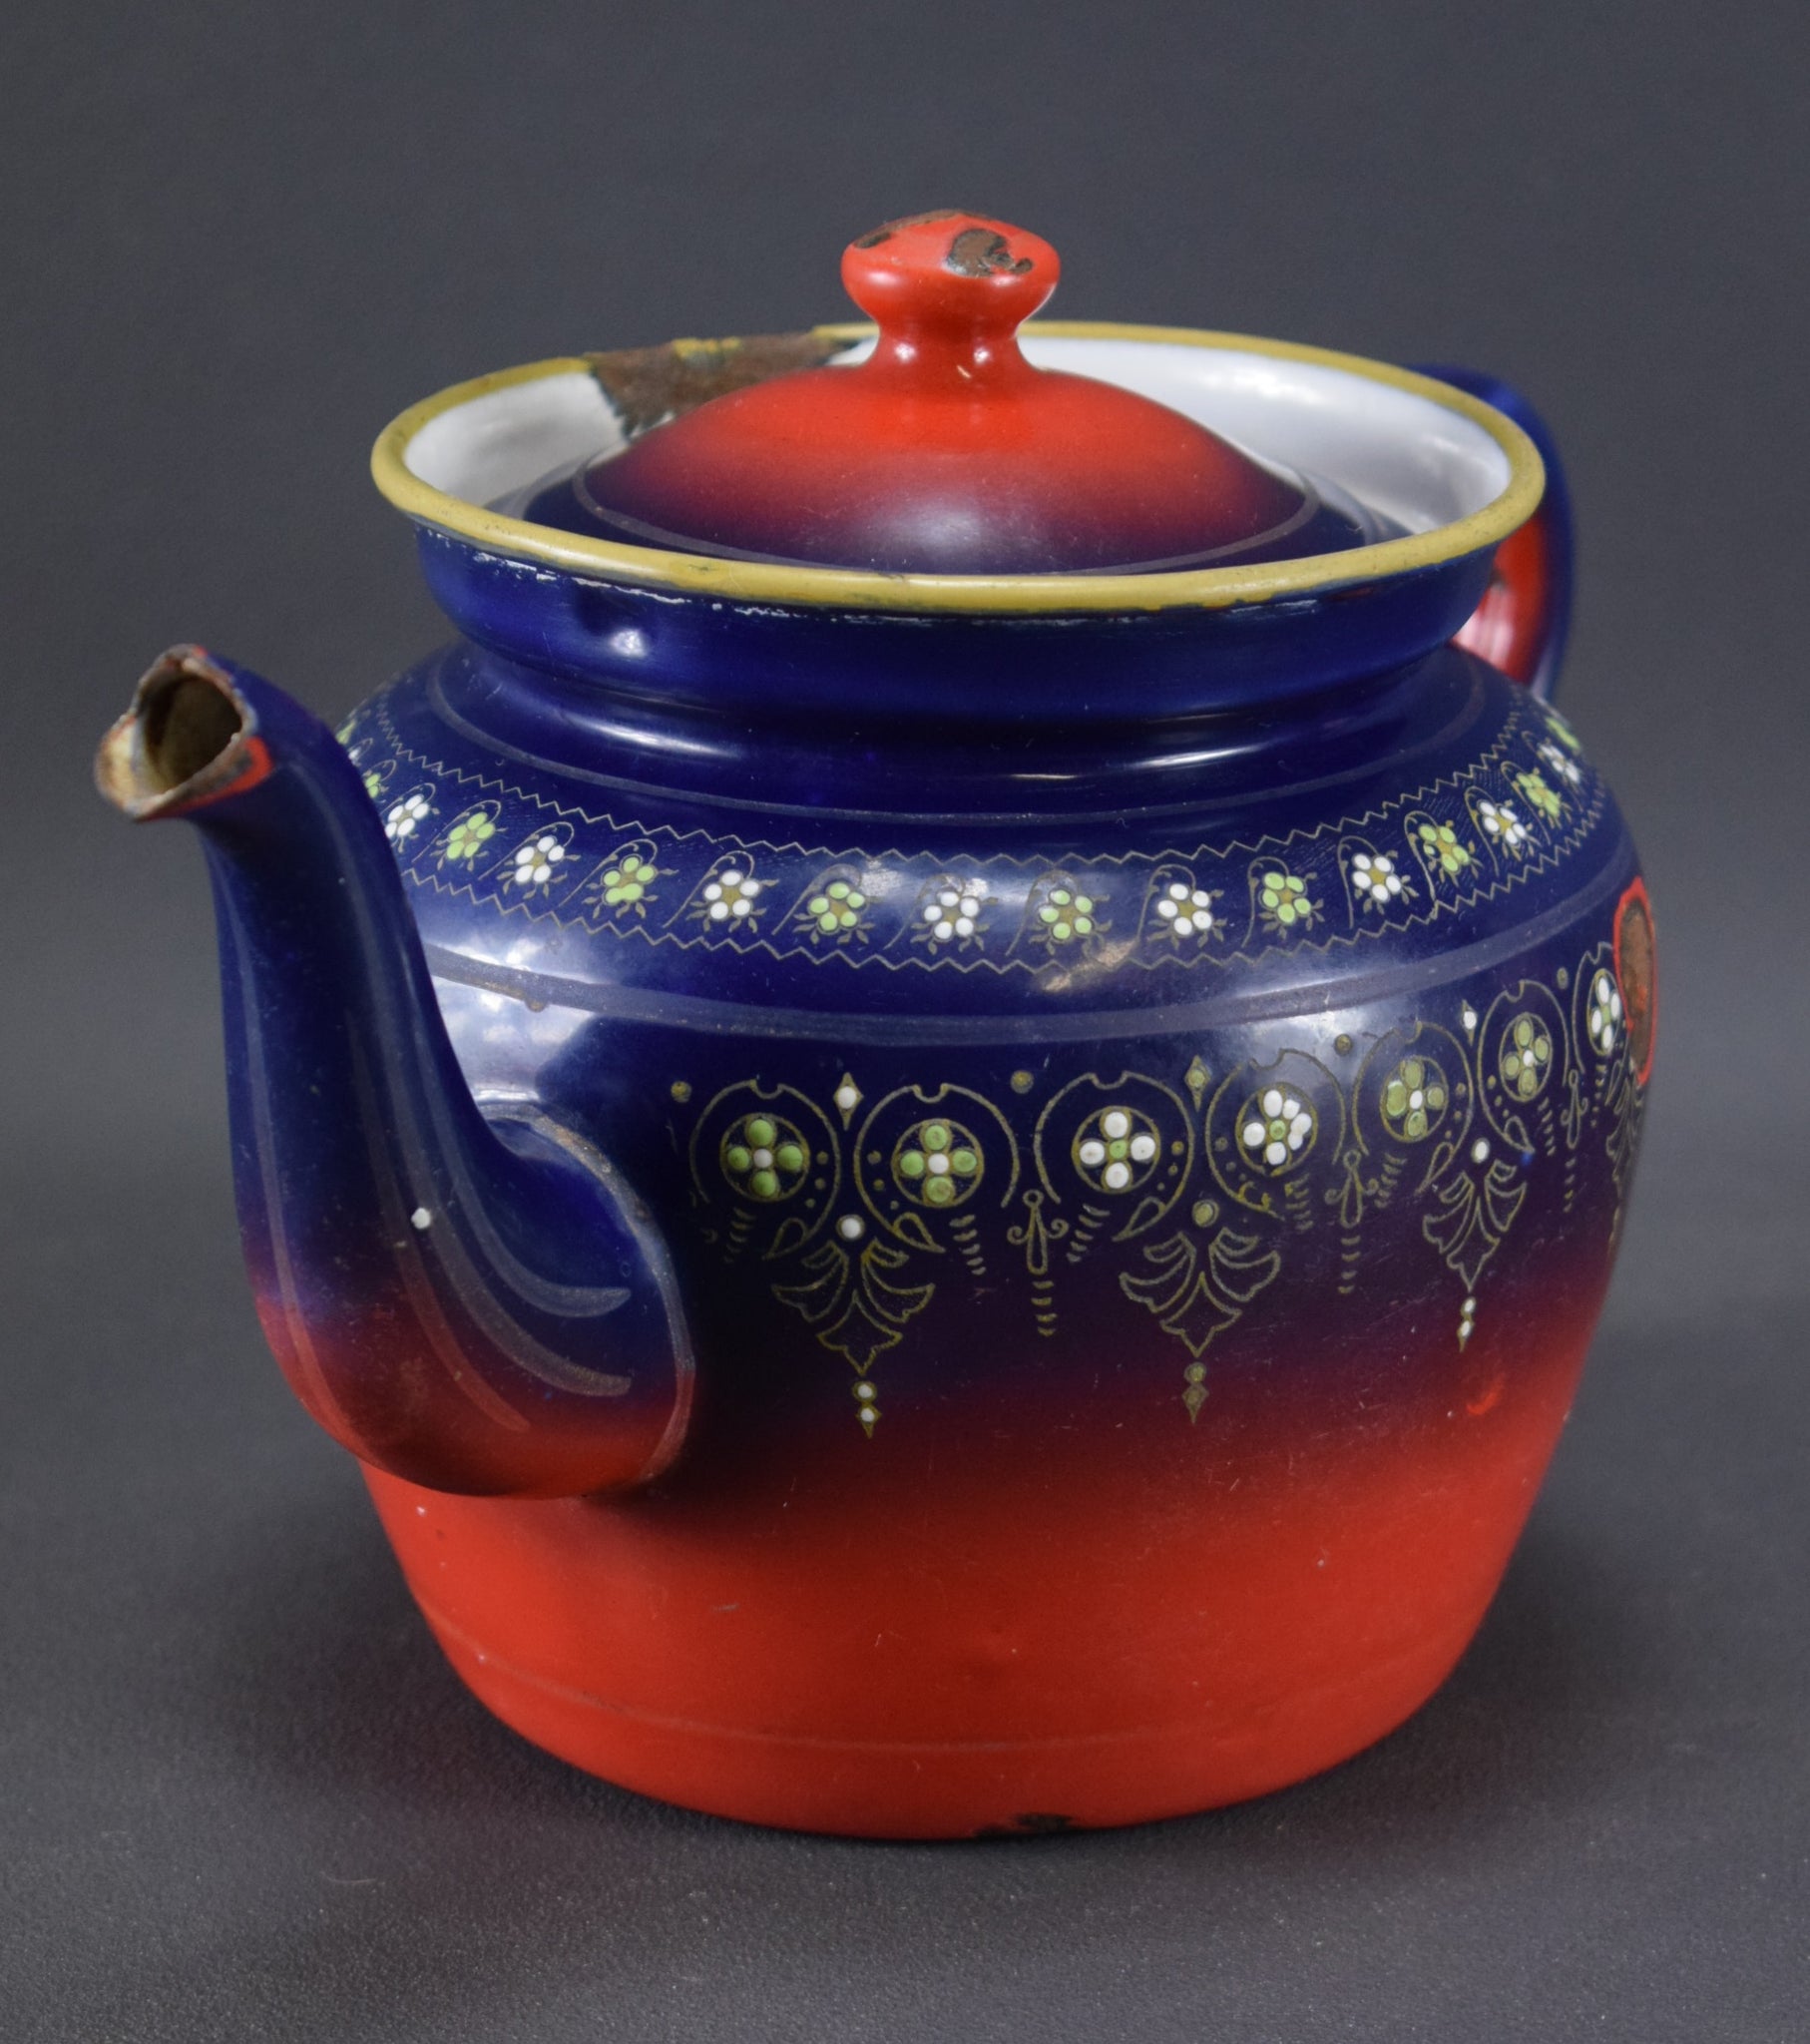 French Vintage Red and Blue Enamel Tea Pot BB Mark Kitchenalia